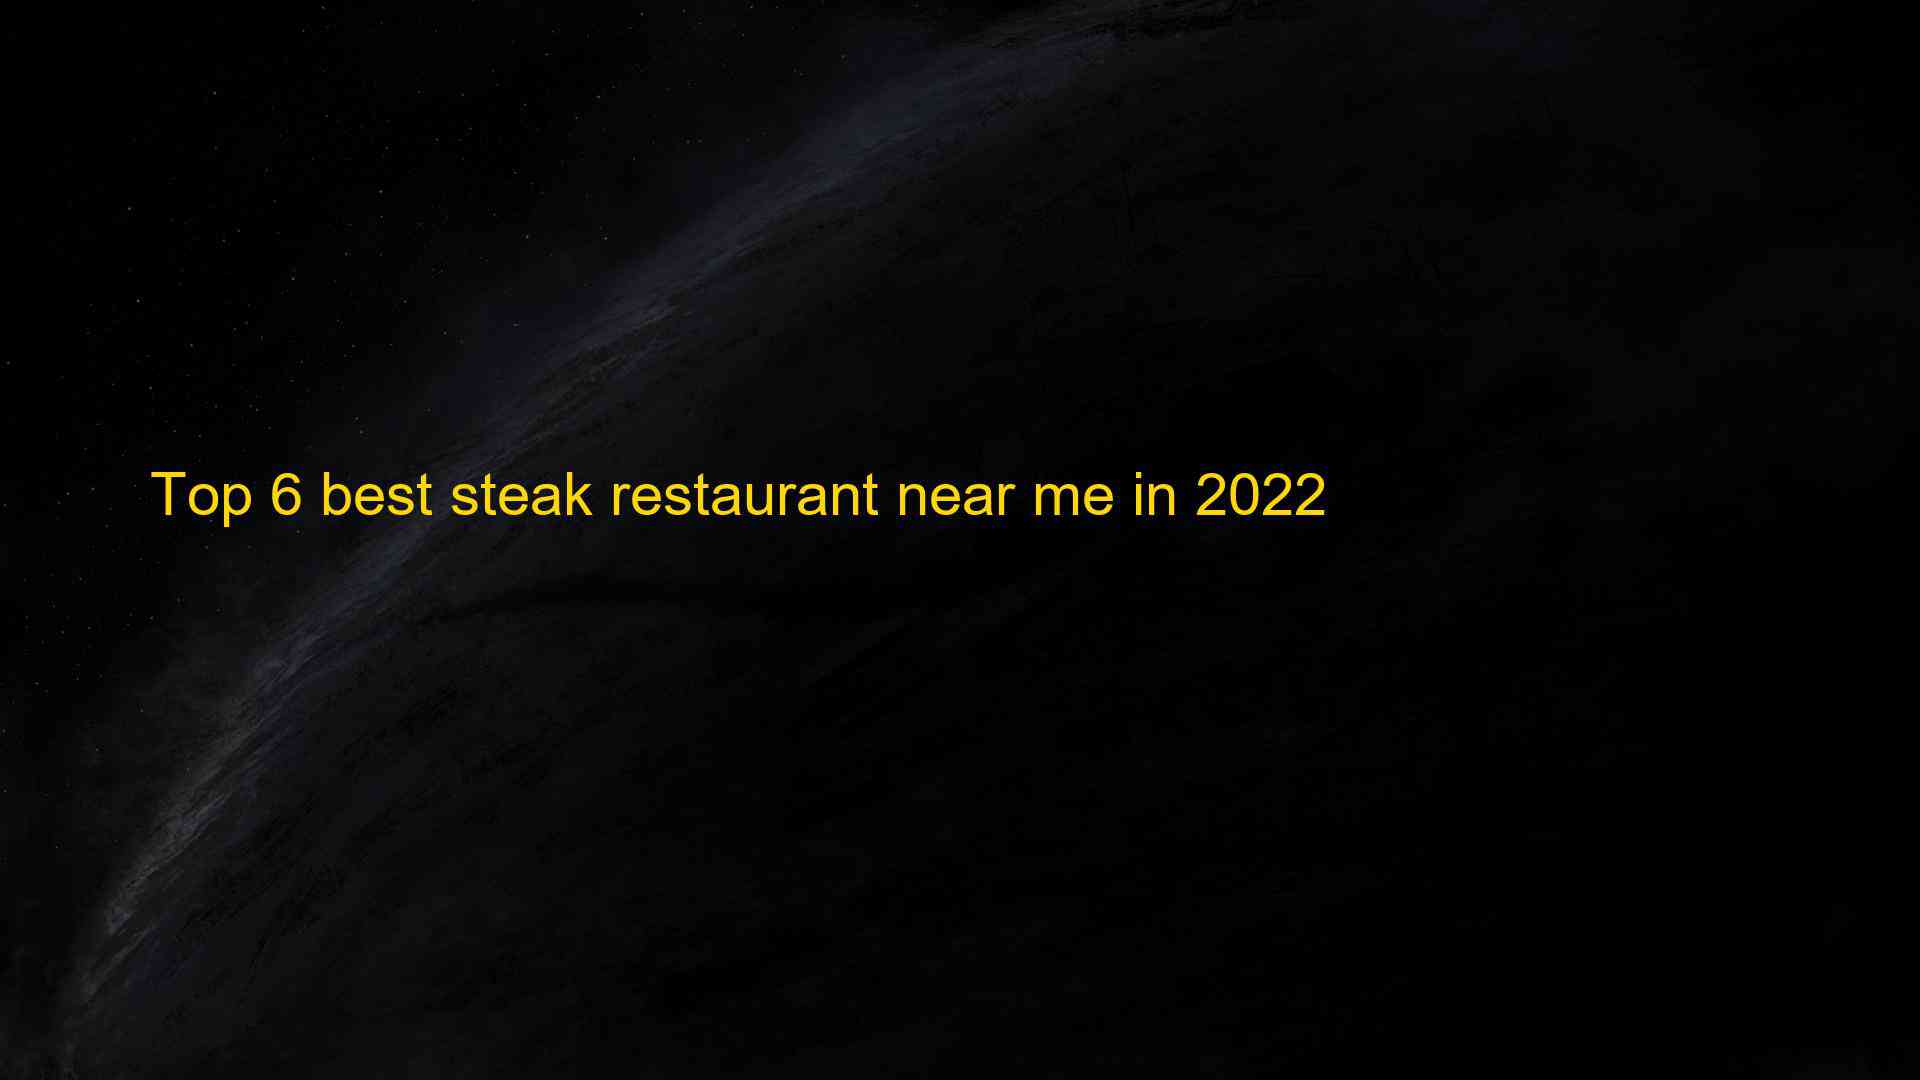 Top 6 best steak restaurant near me in 2022 1663334344